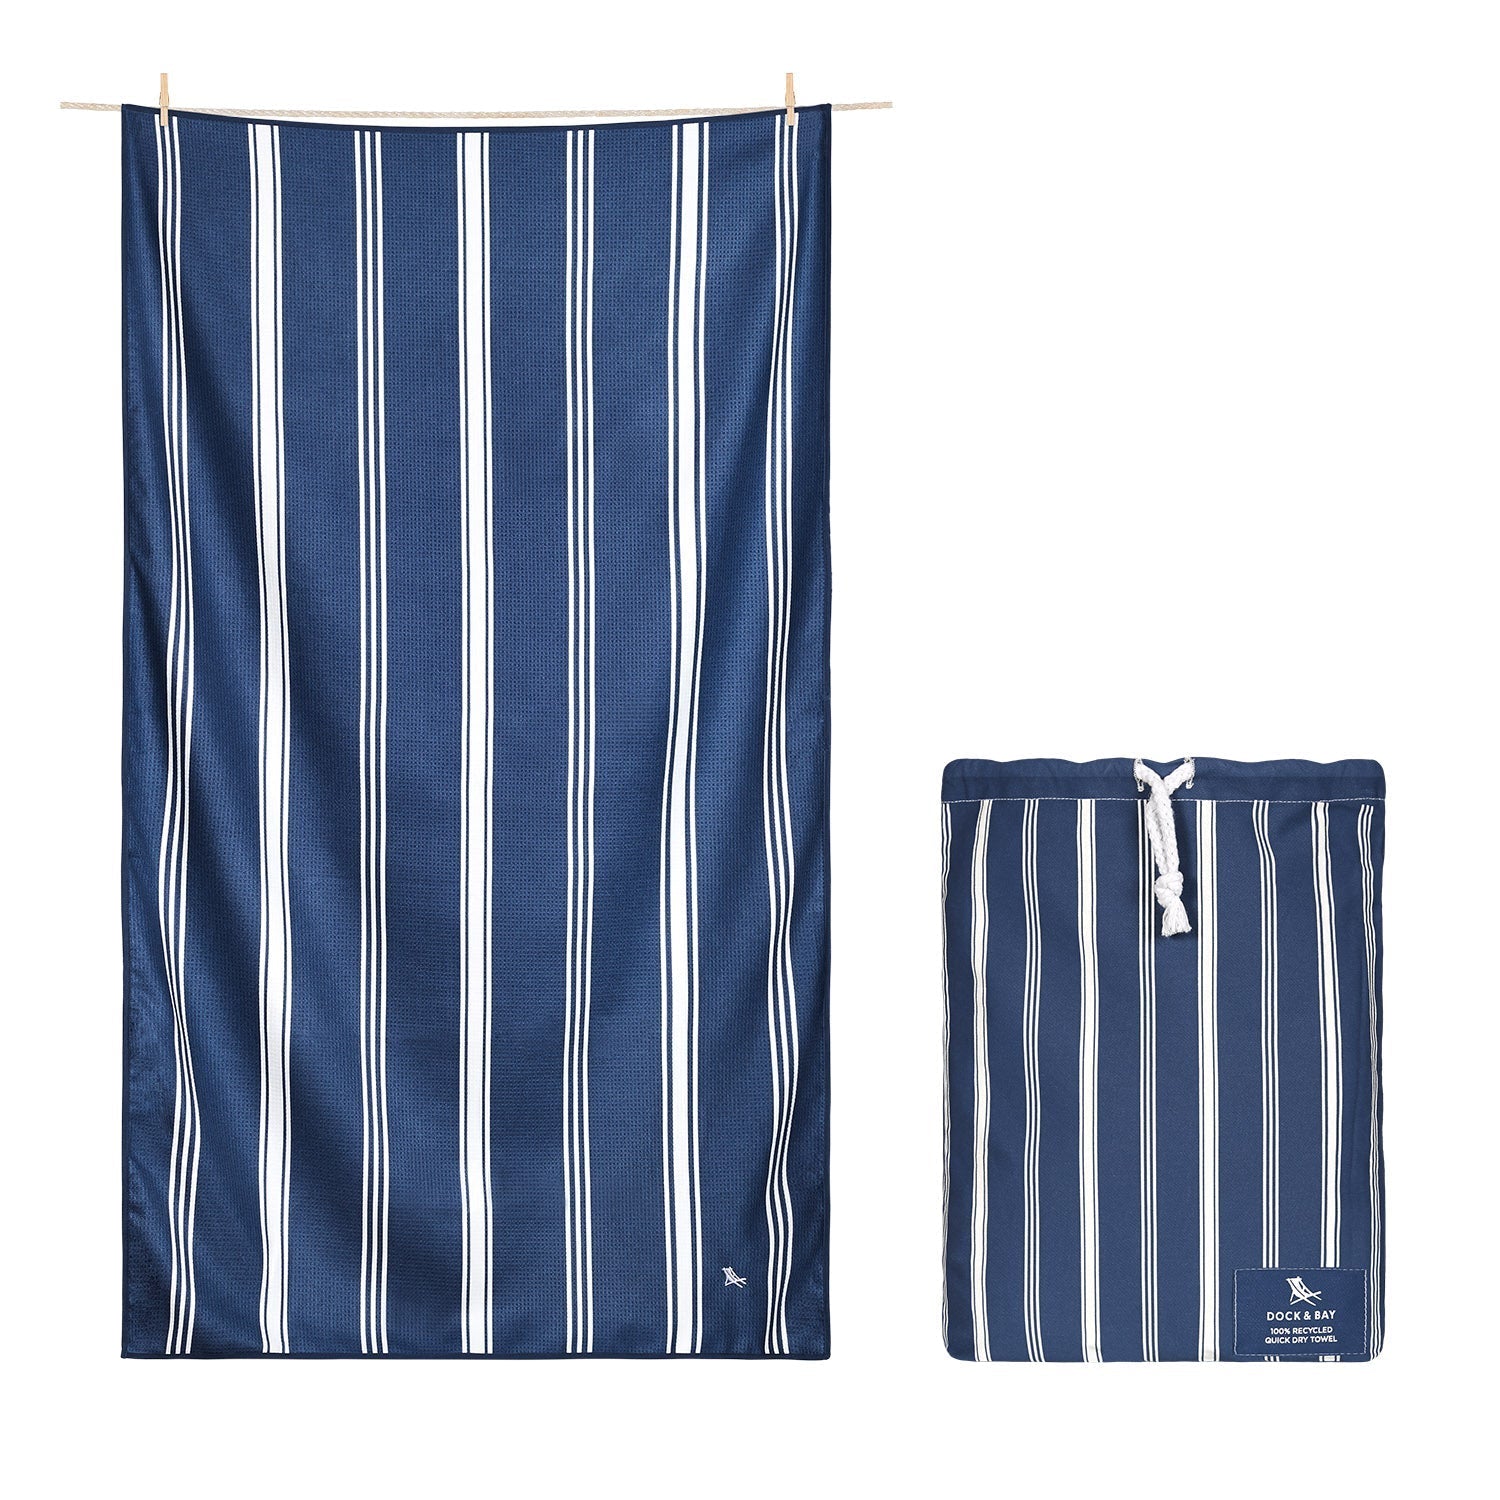 Dock & Bay Bath Towels - Home - Patchouli Navy